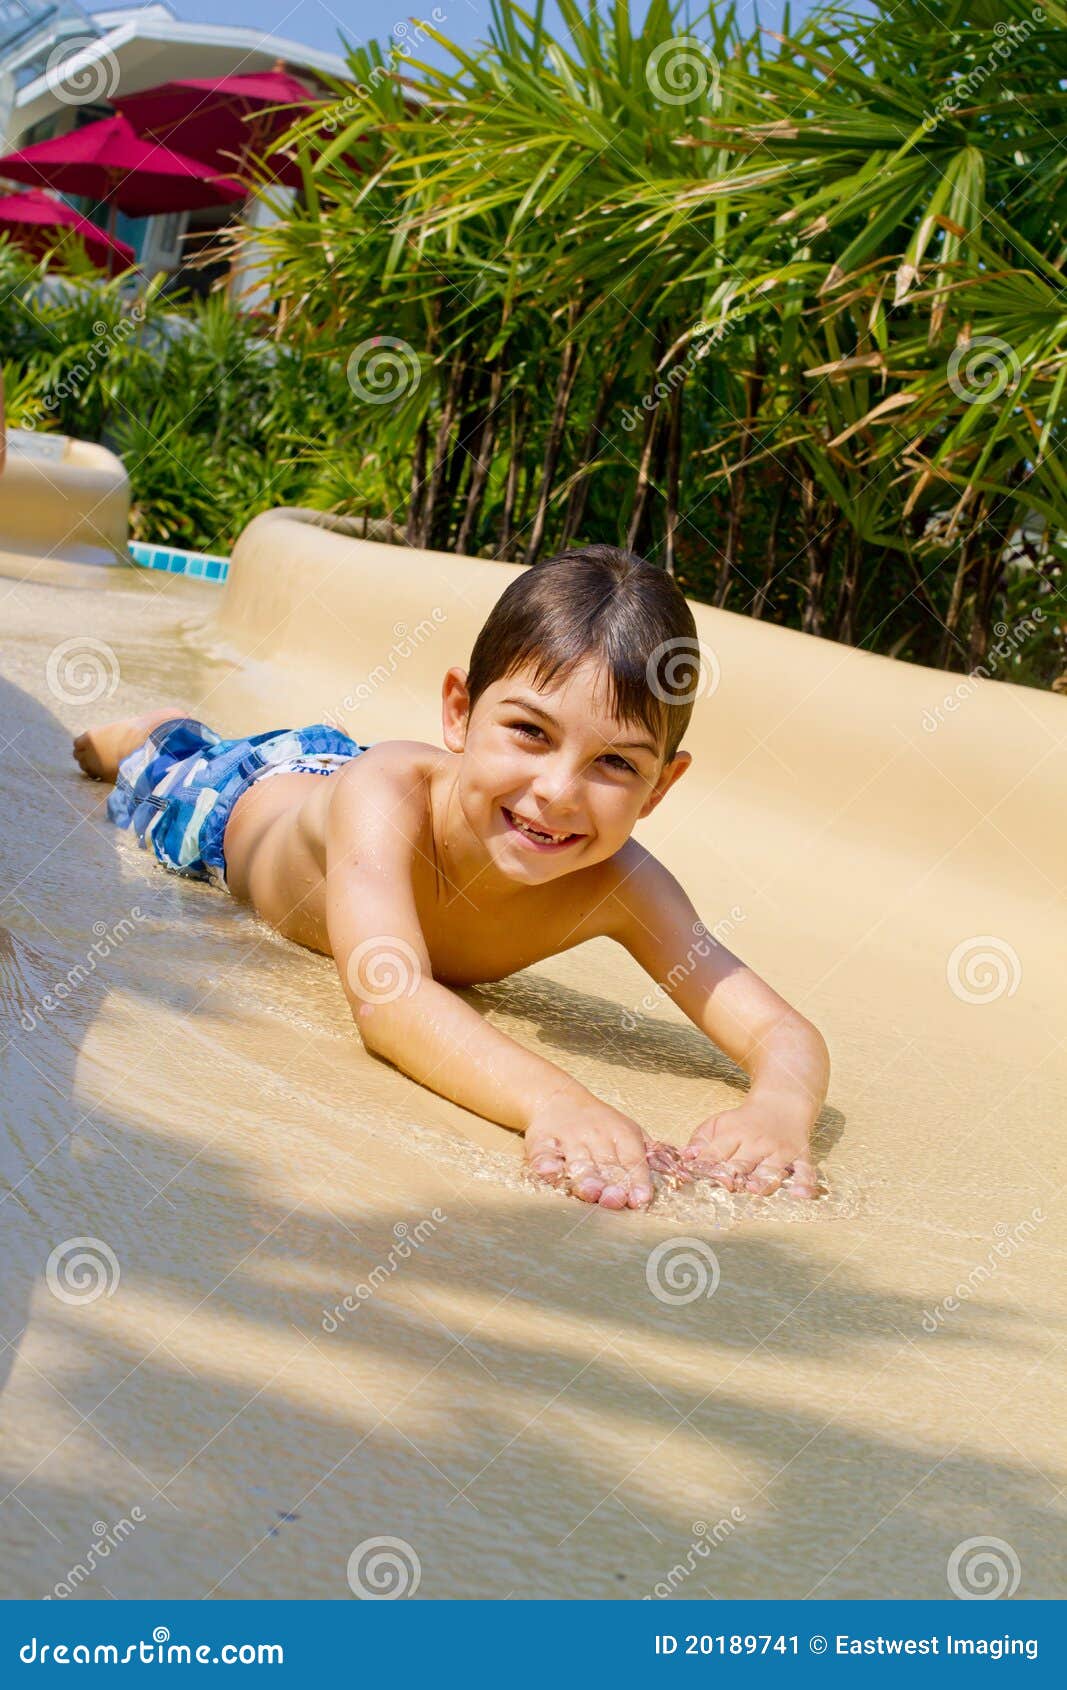 Little Boy Sliding Down Water Slide Stock Image - Image of portrait